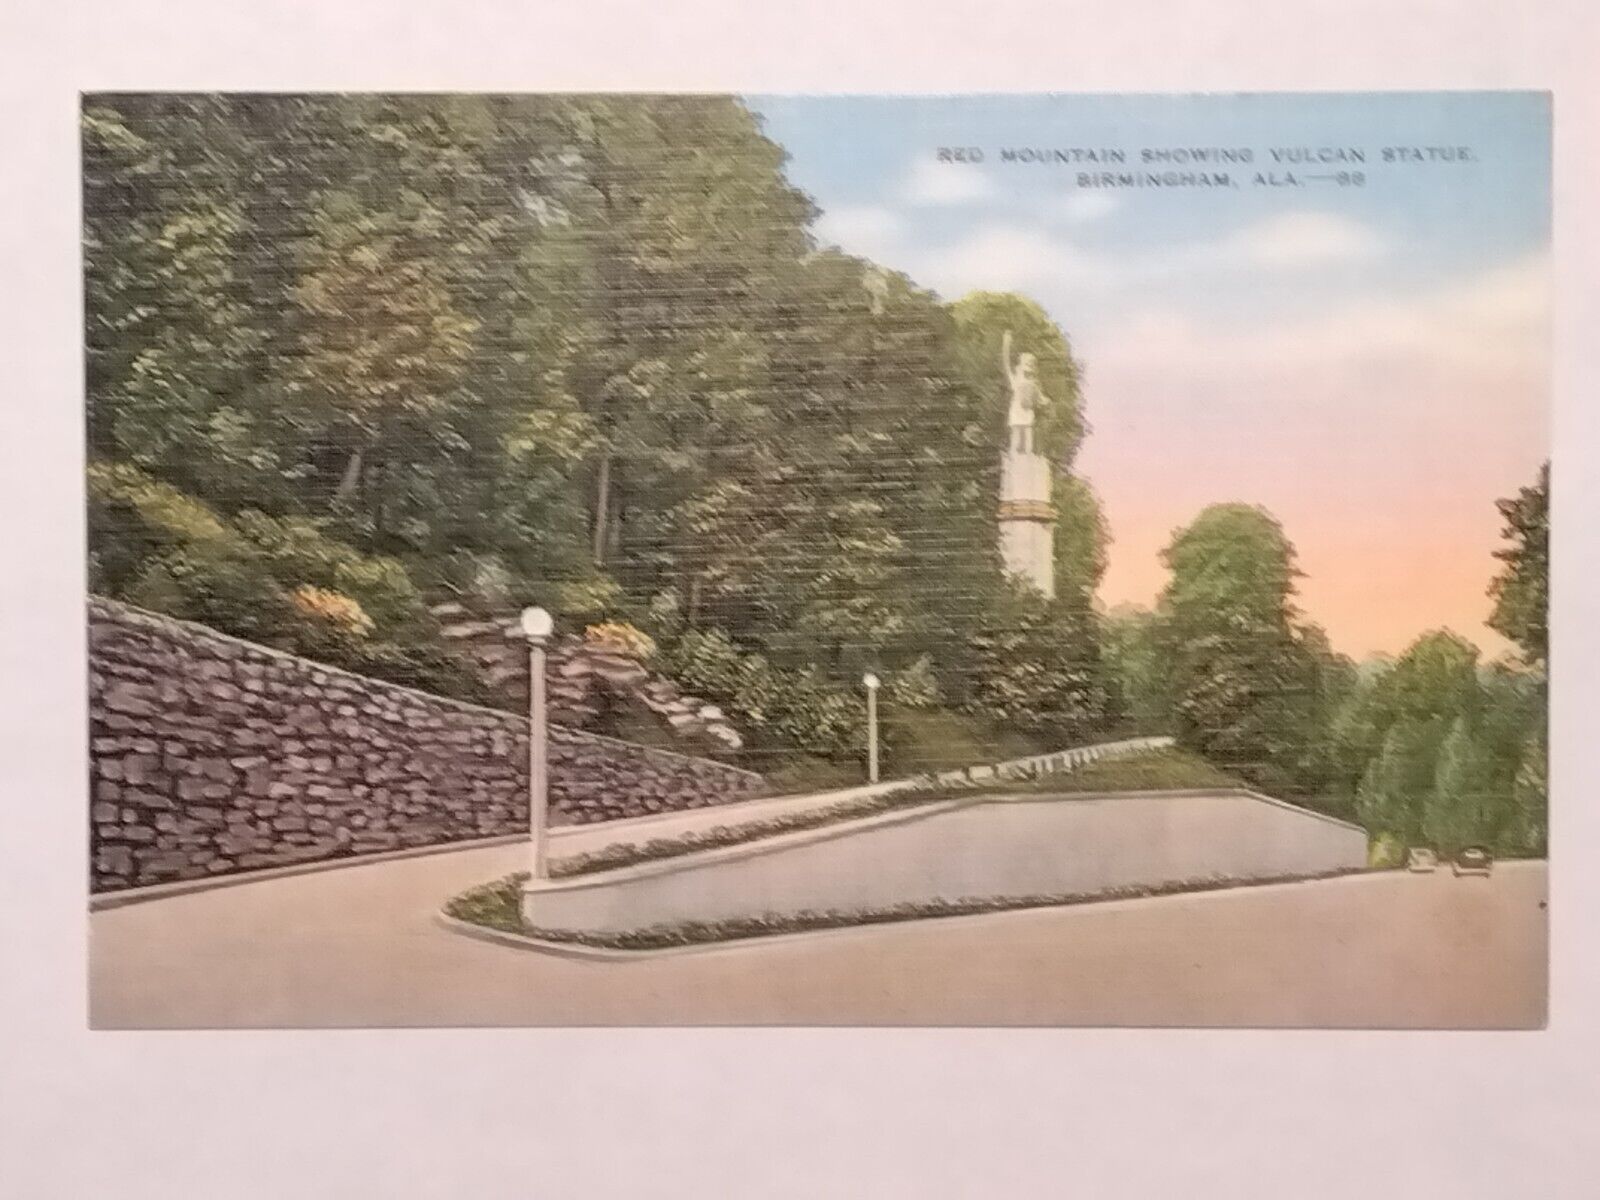 Red Mountain. Showing Vulcan Statue Birmingham Alabama Postcard